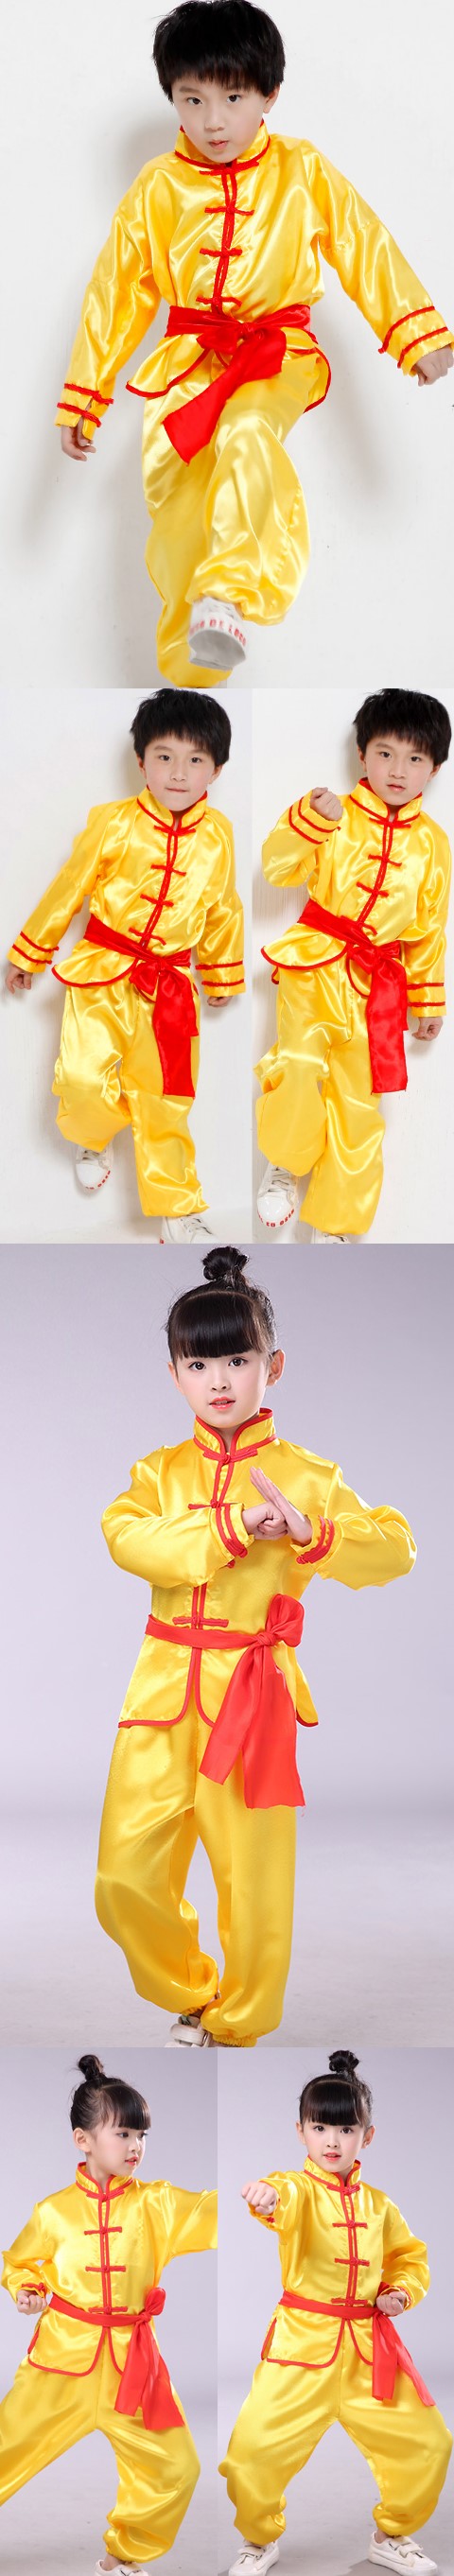 Bargain - Kid's Kung Fu Uniform with Sash - Yellow